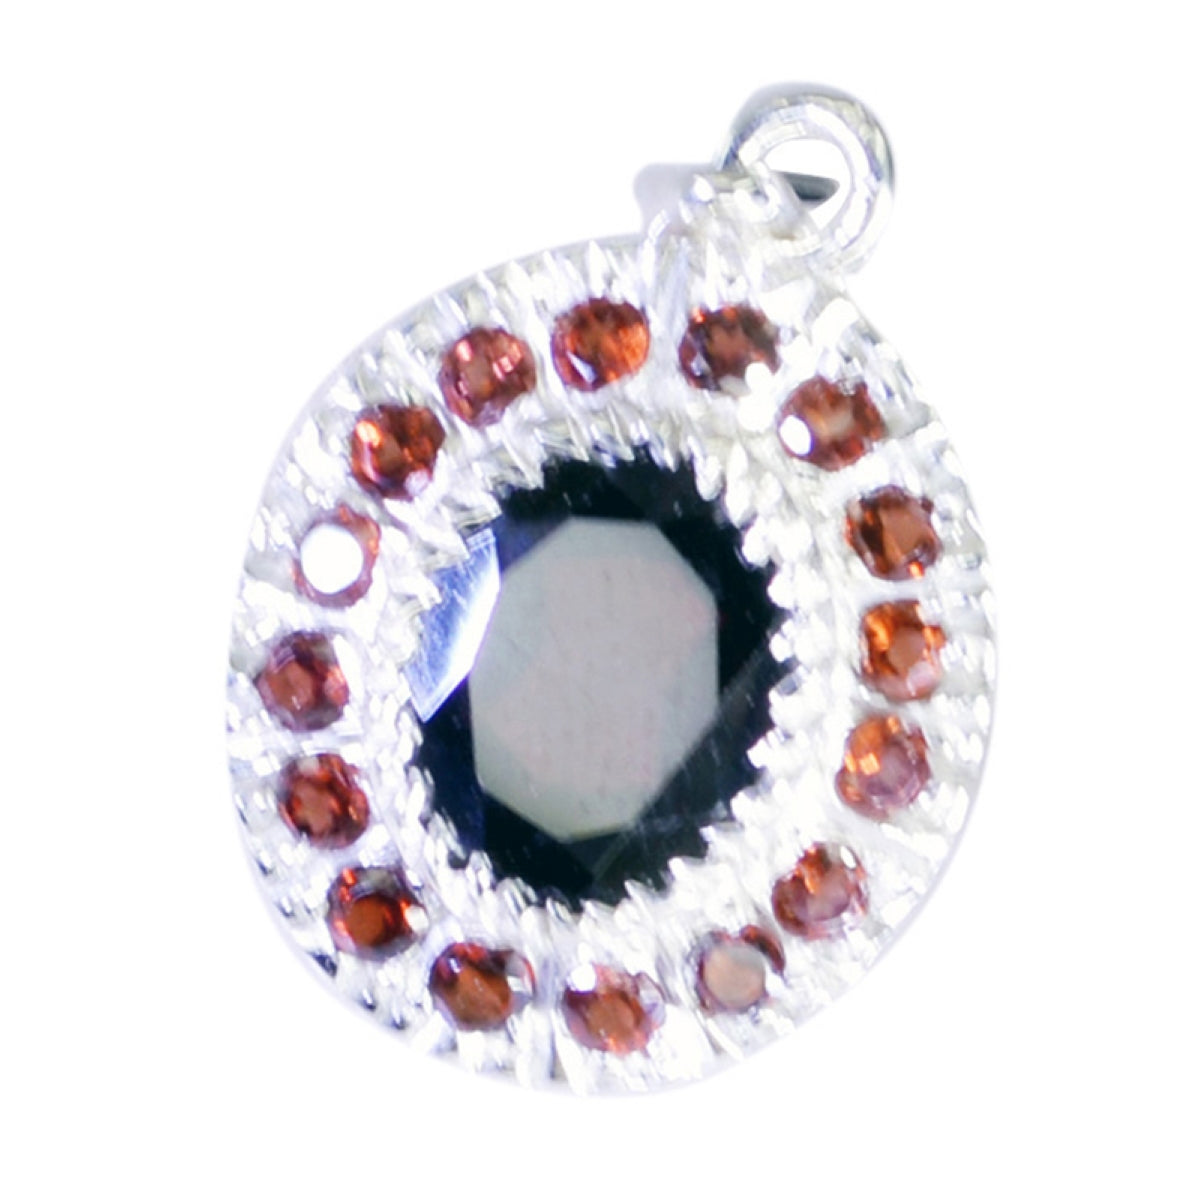 Riyo Real Gemstones Multi Shape Faceted Red Garnet Sterling Silver Pendants gift for mother